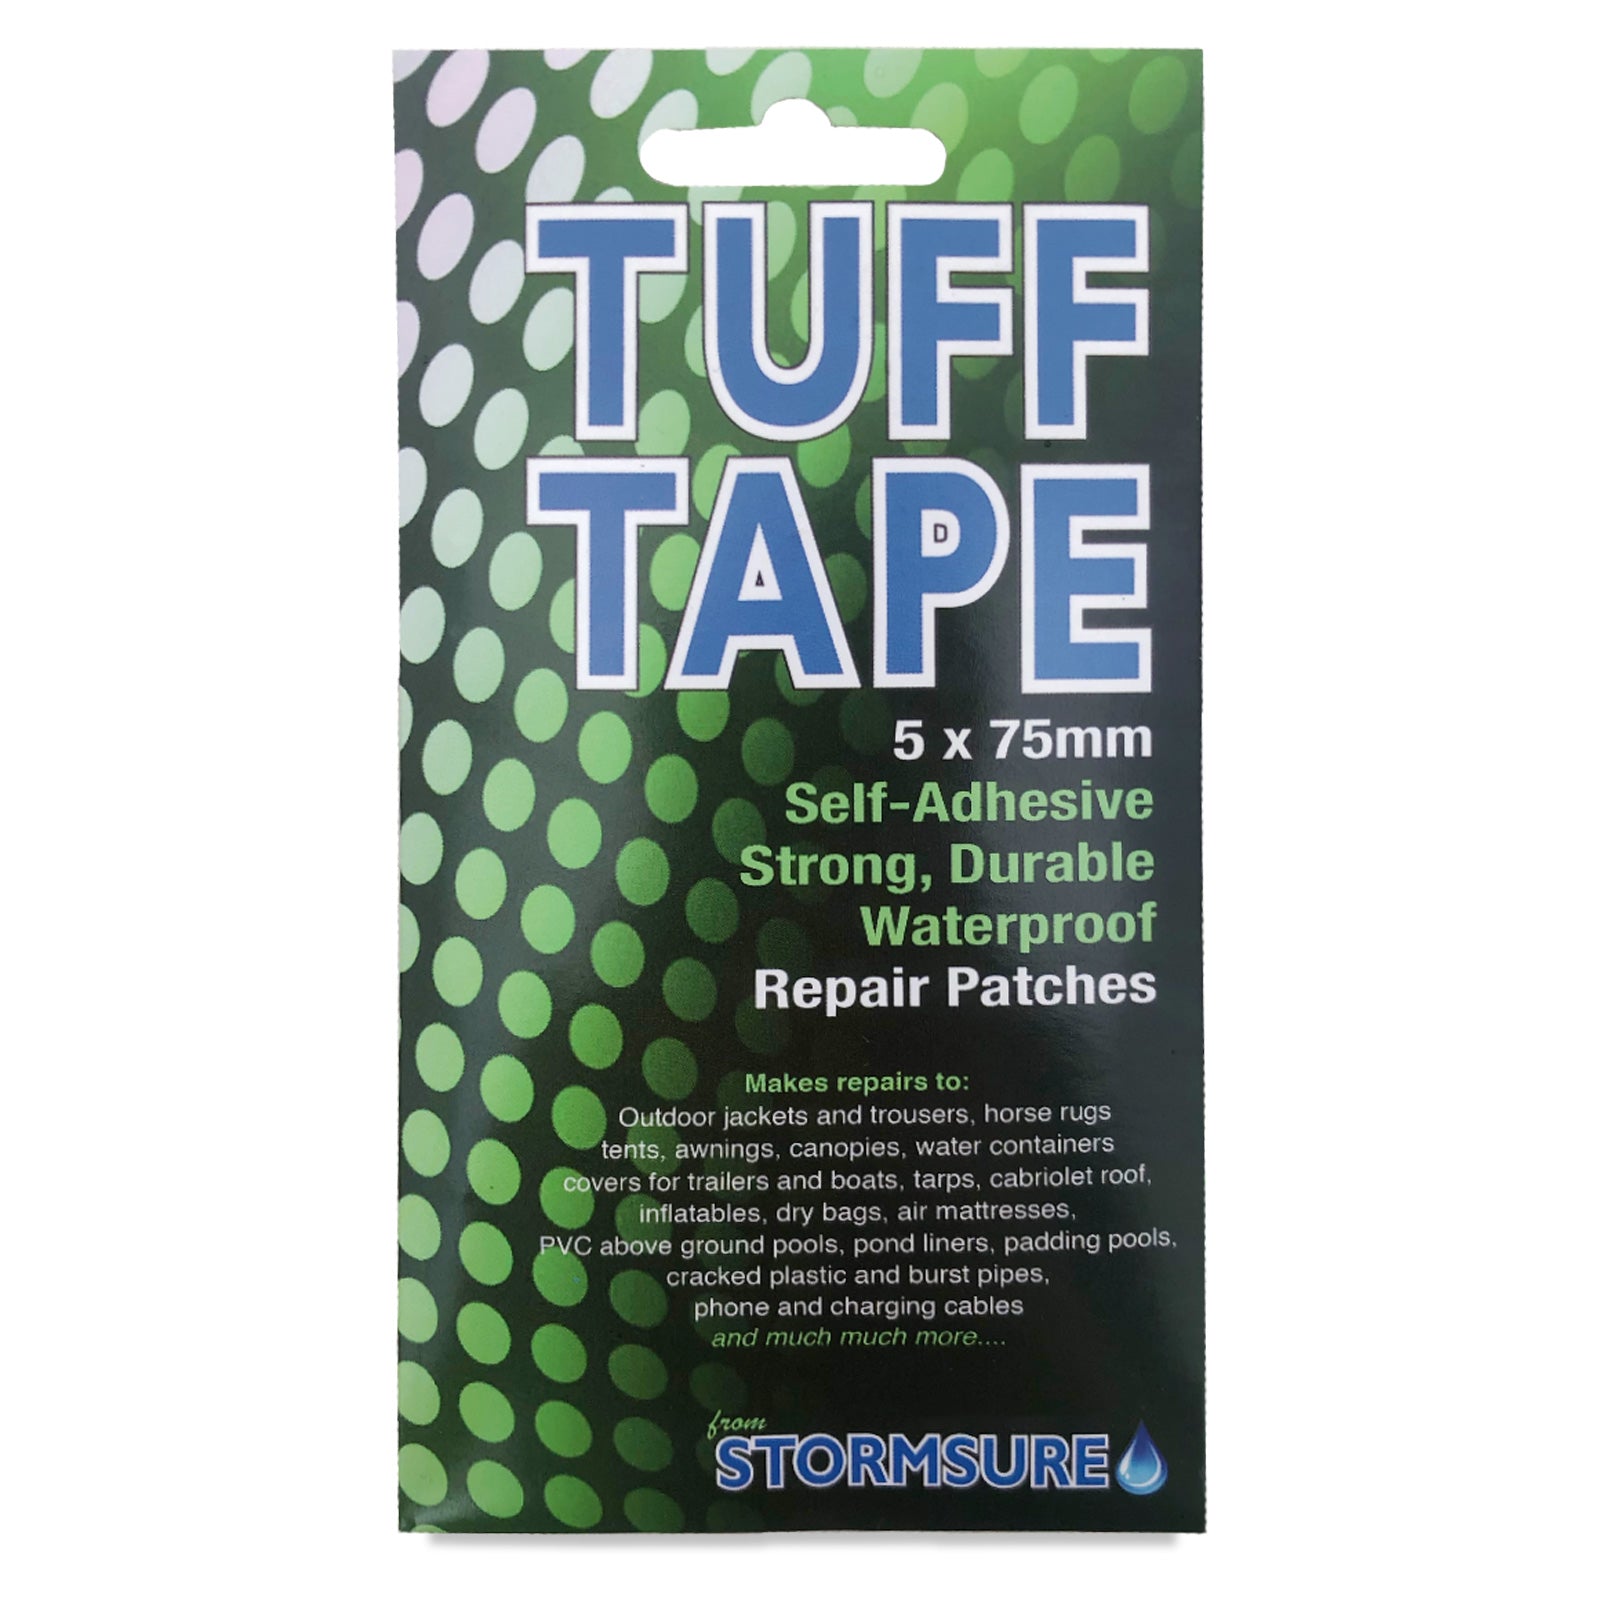 TUFF Tape Waterproof Repair Patches 75mm (5-Pack)